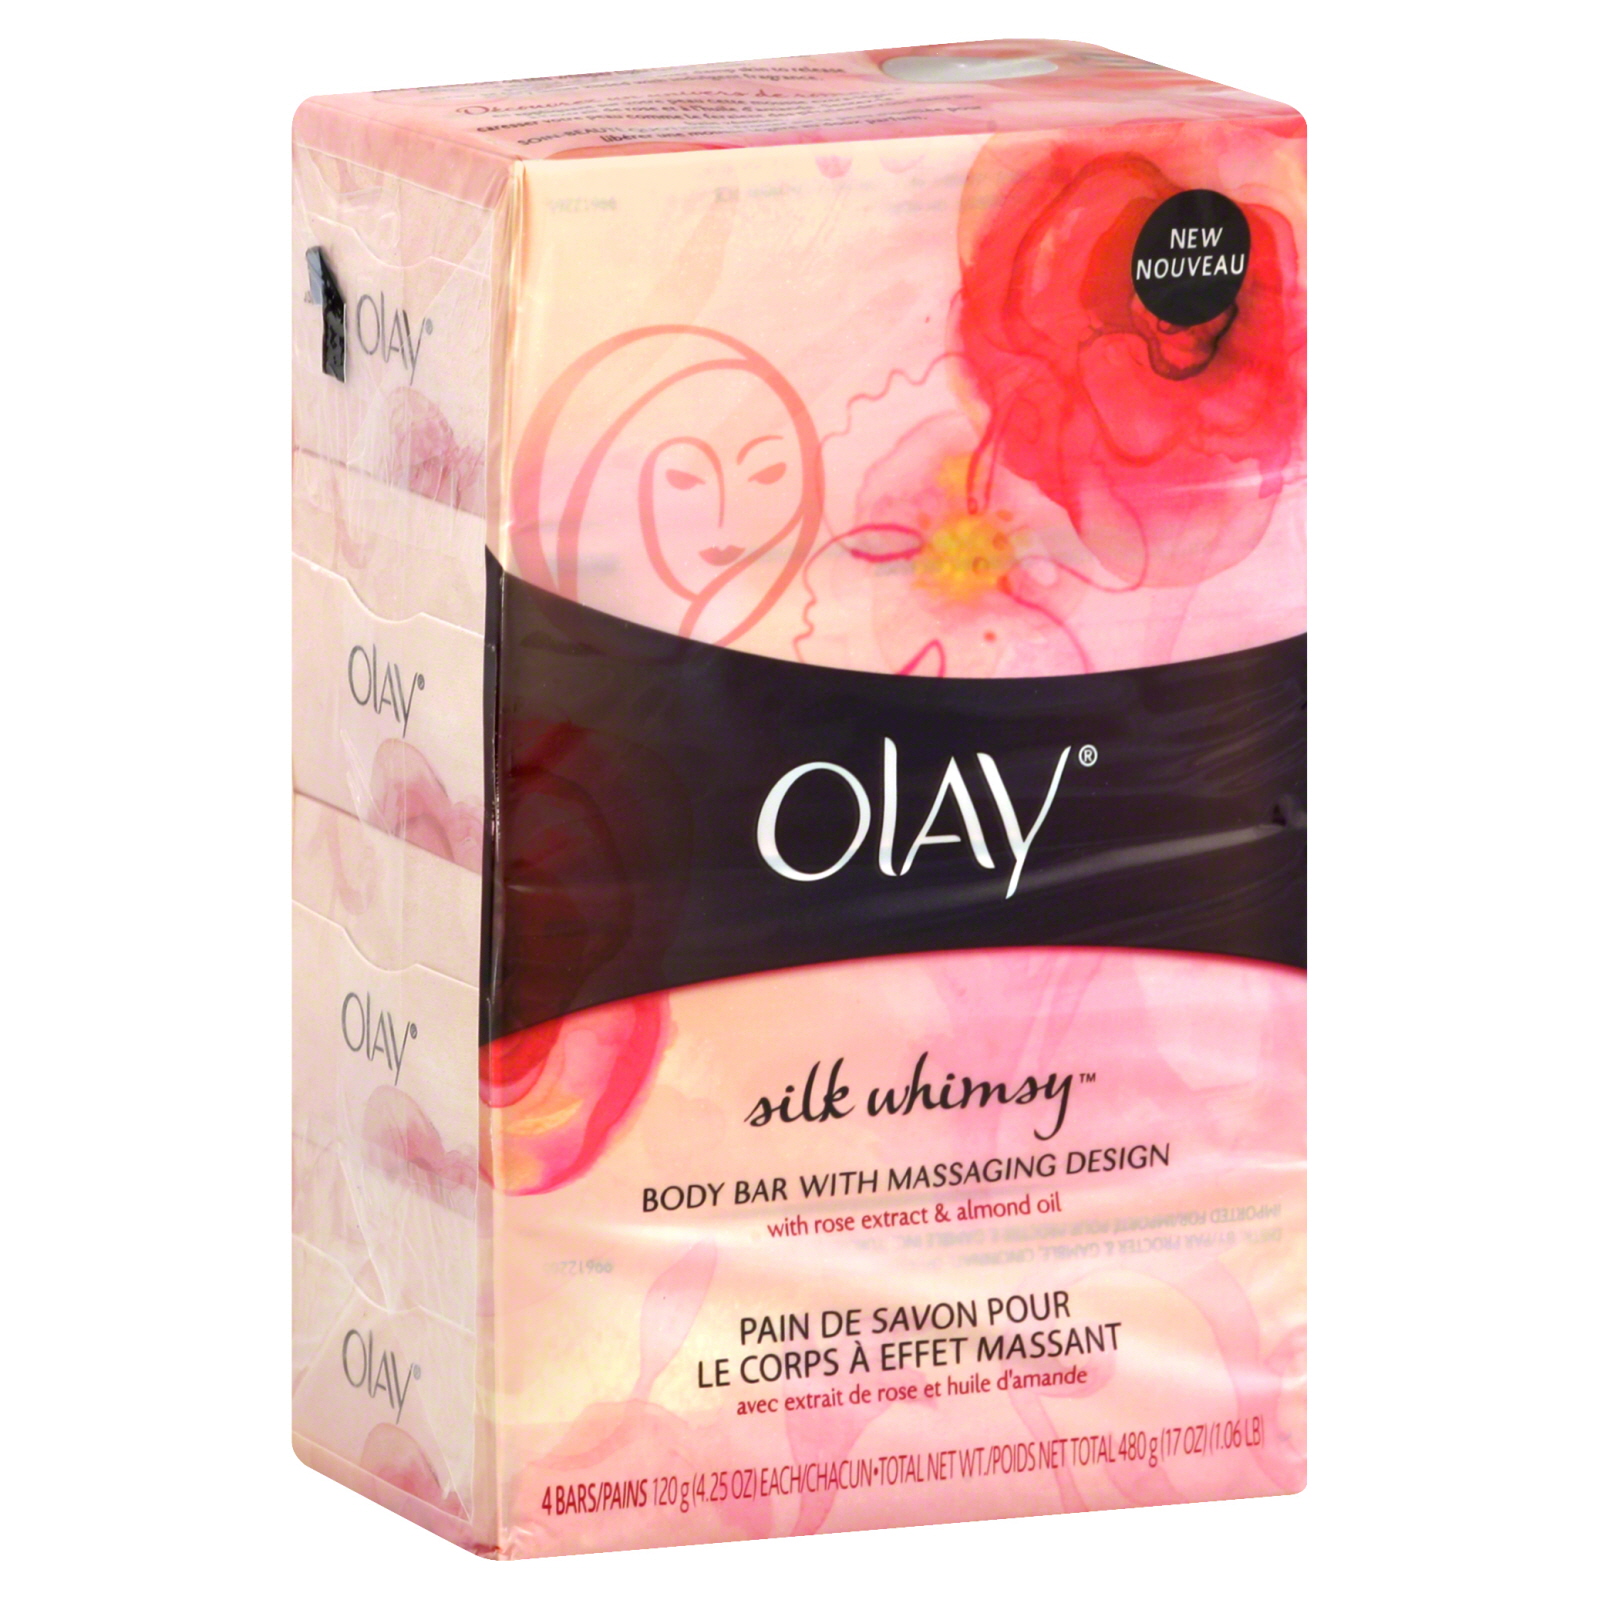 Olay Silk Whimsy Body Bar, with Massaging Design, 4 - 4.25 oz Bars